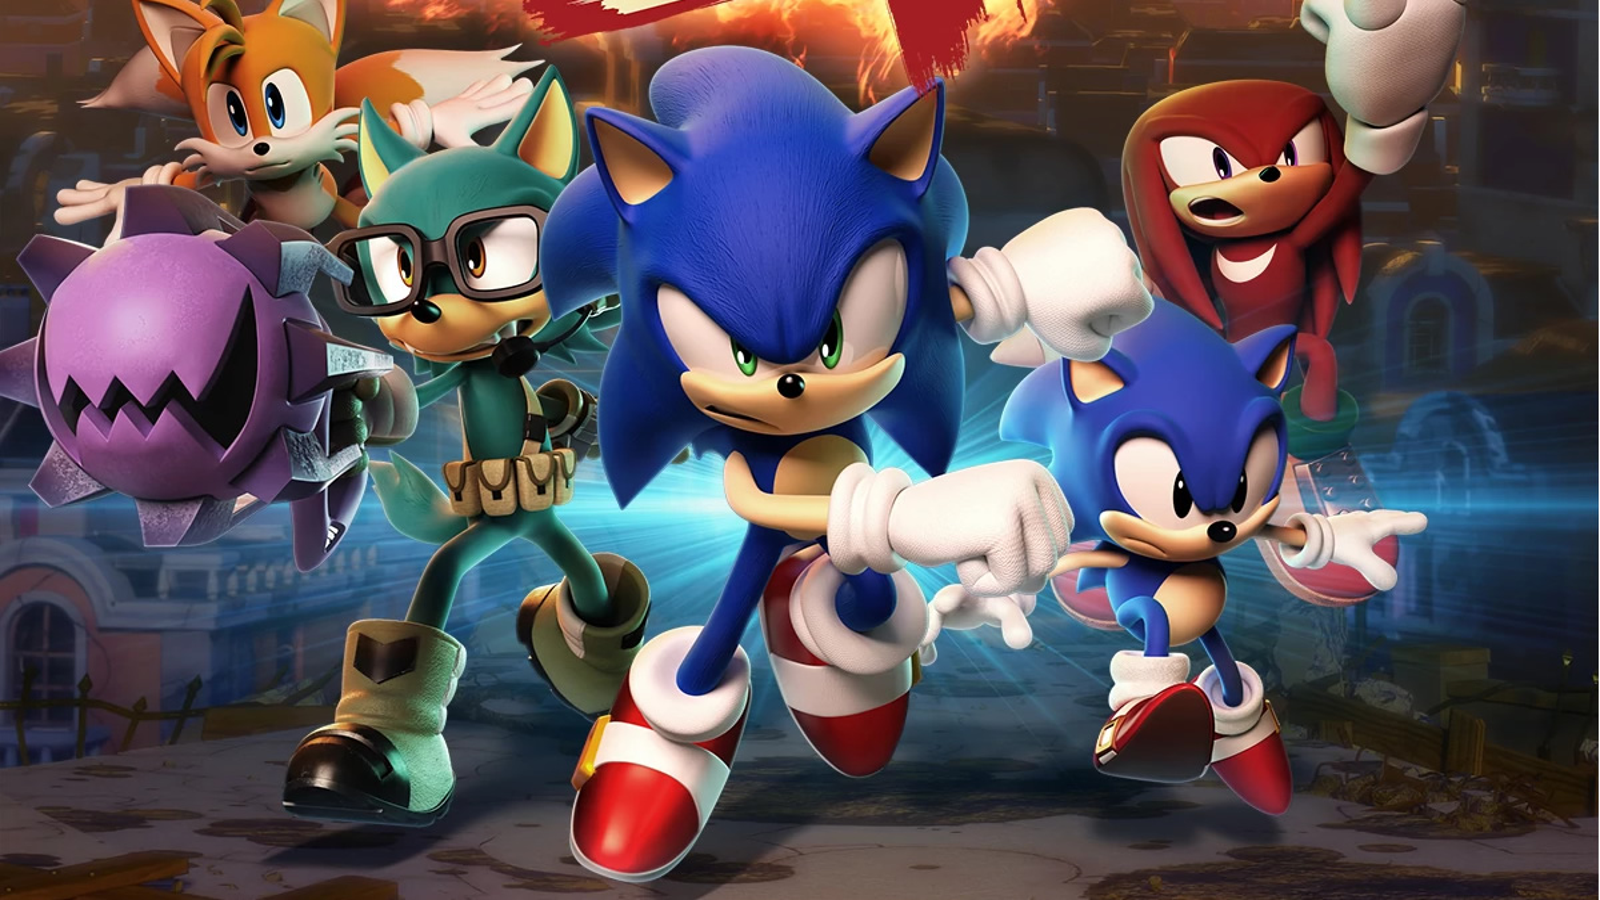 Sonic the Hedgehog PlayStation 3 Gameplay - Kingdom Valley 